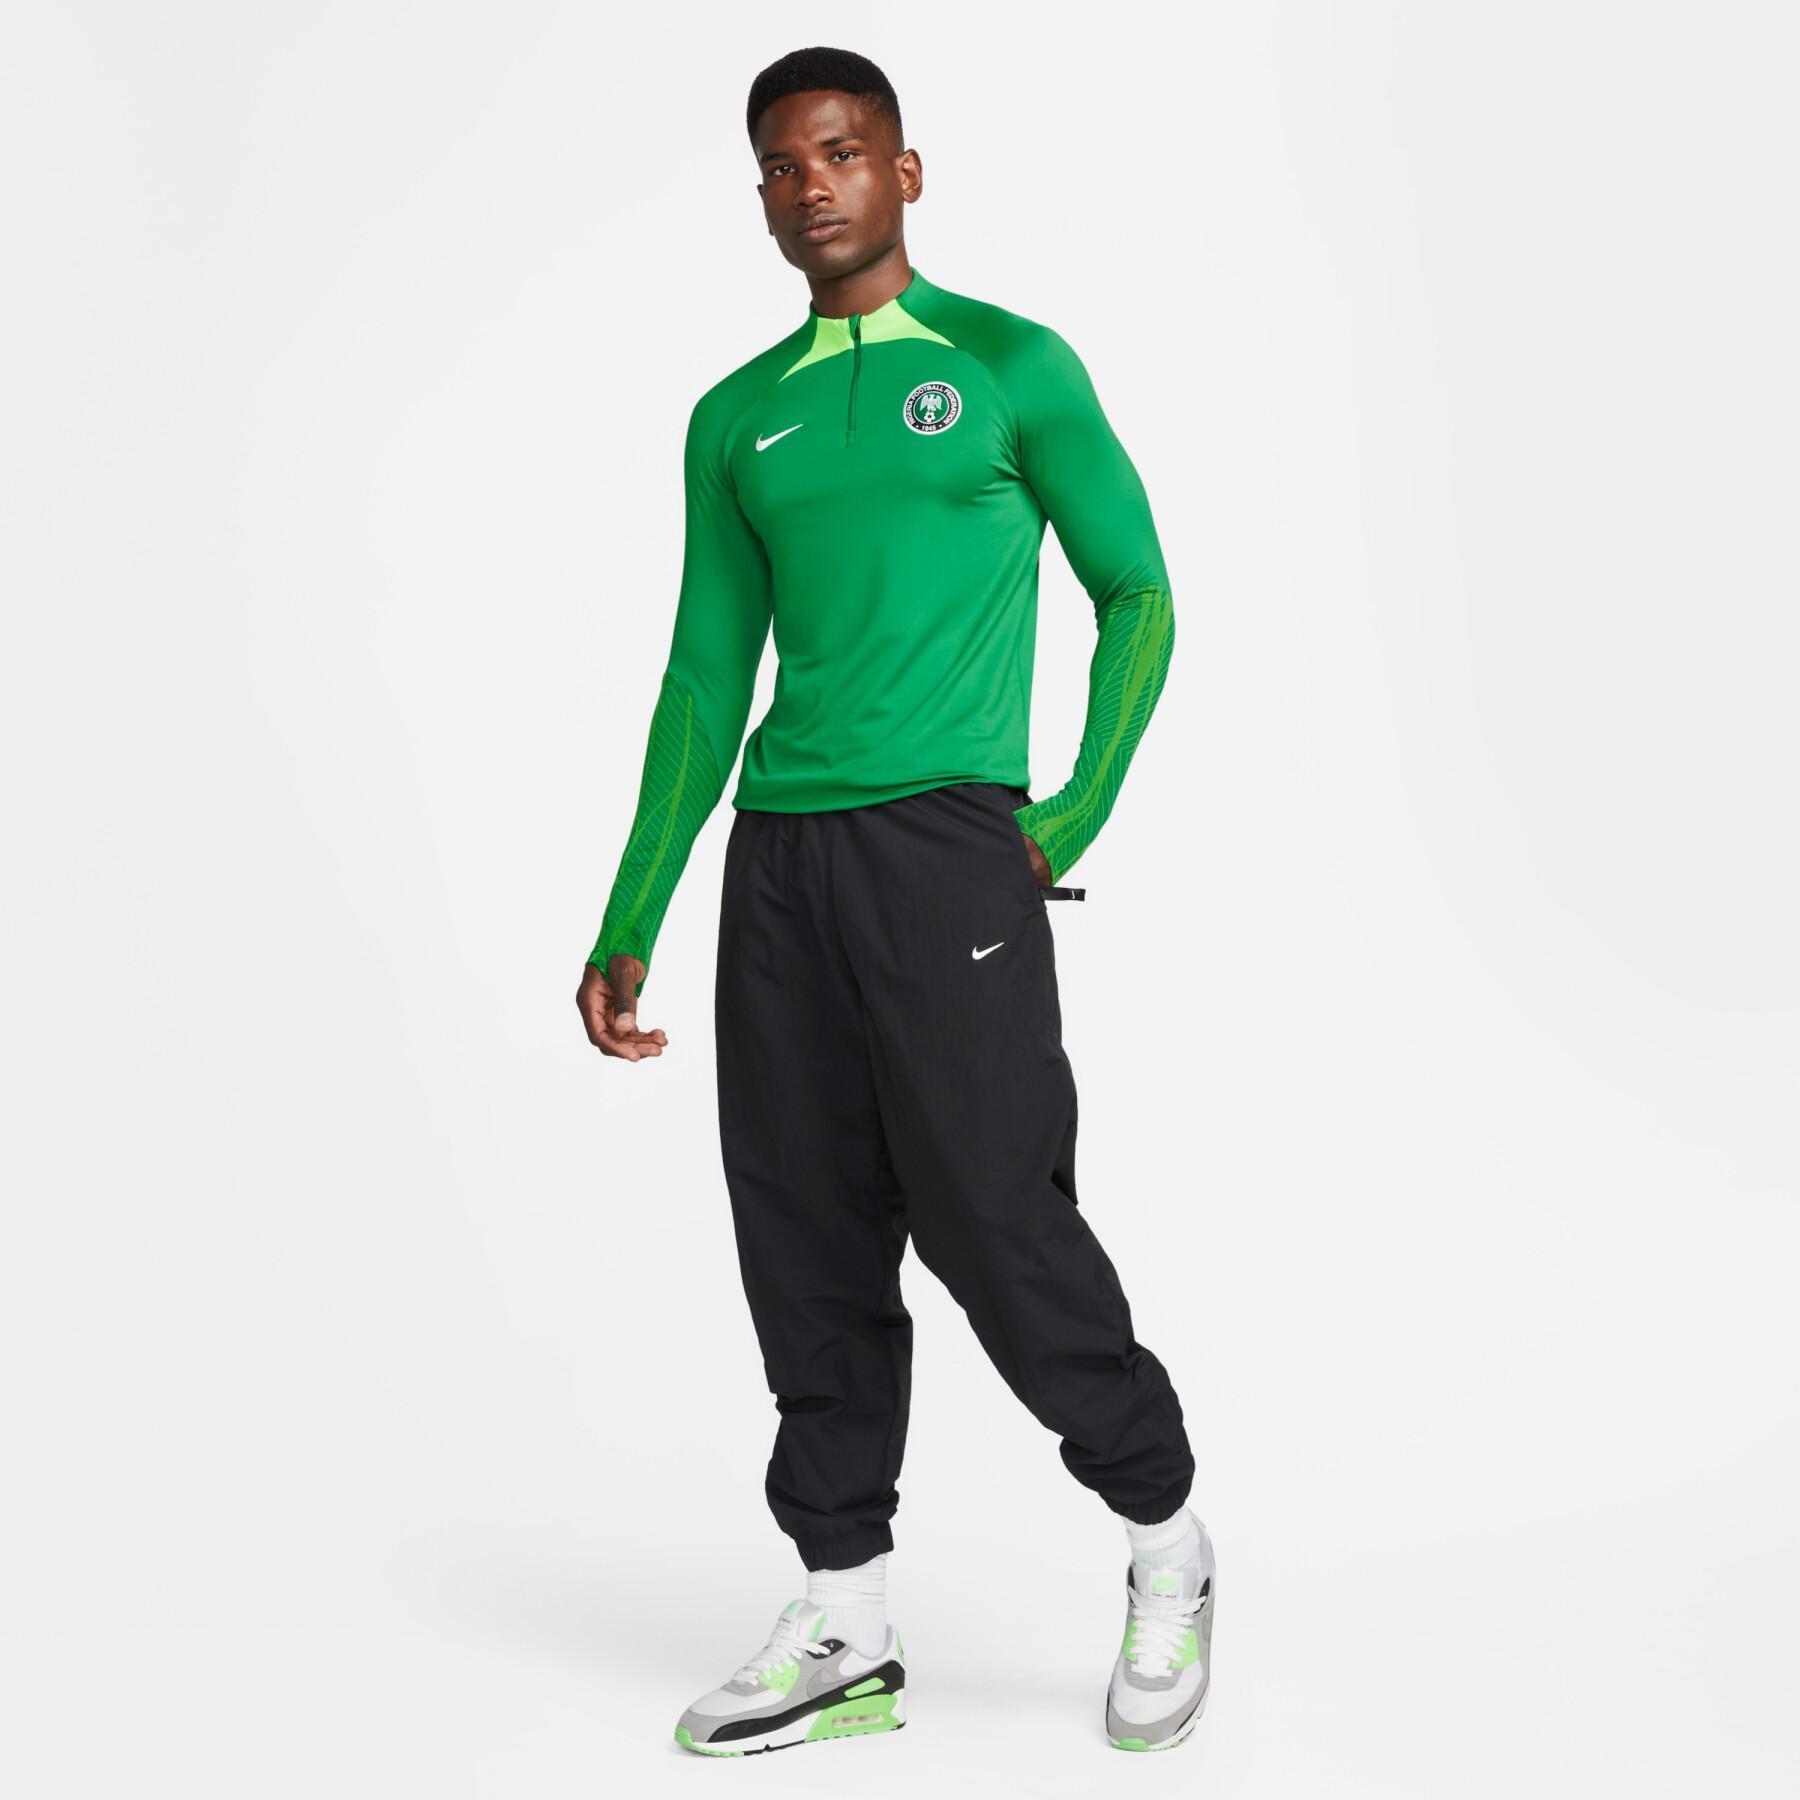 Nike Pro Combat Dri-Fit Vapor Bandana (One Size Fits Most